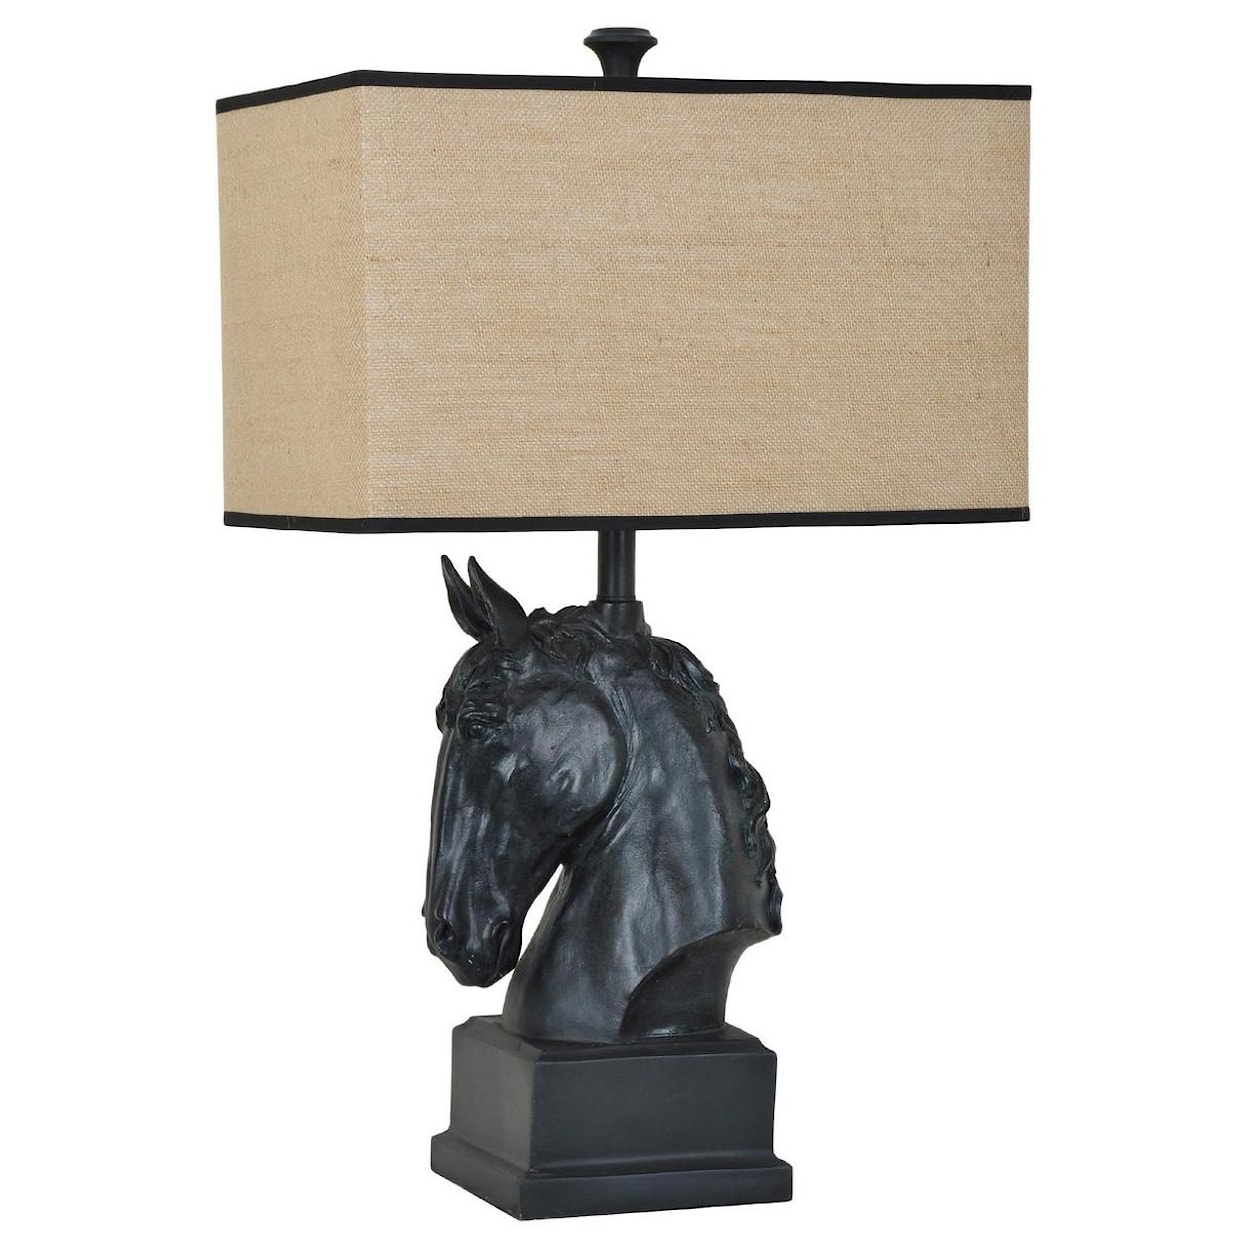 Crestview Collection Lighting Stallion Table Lamp